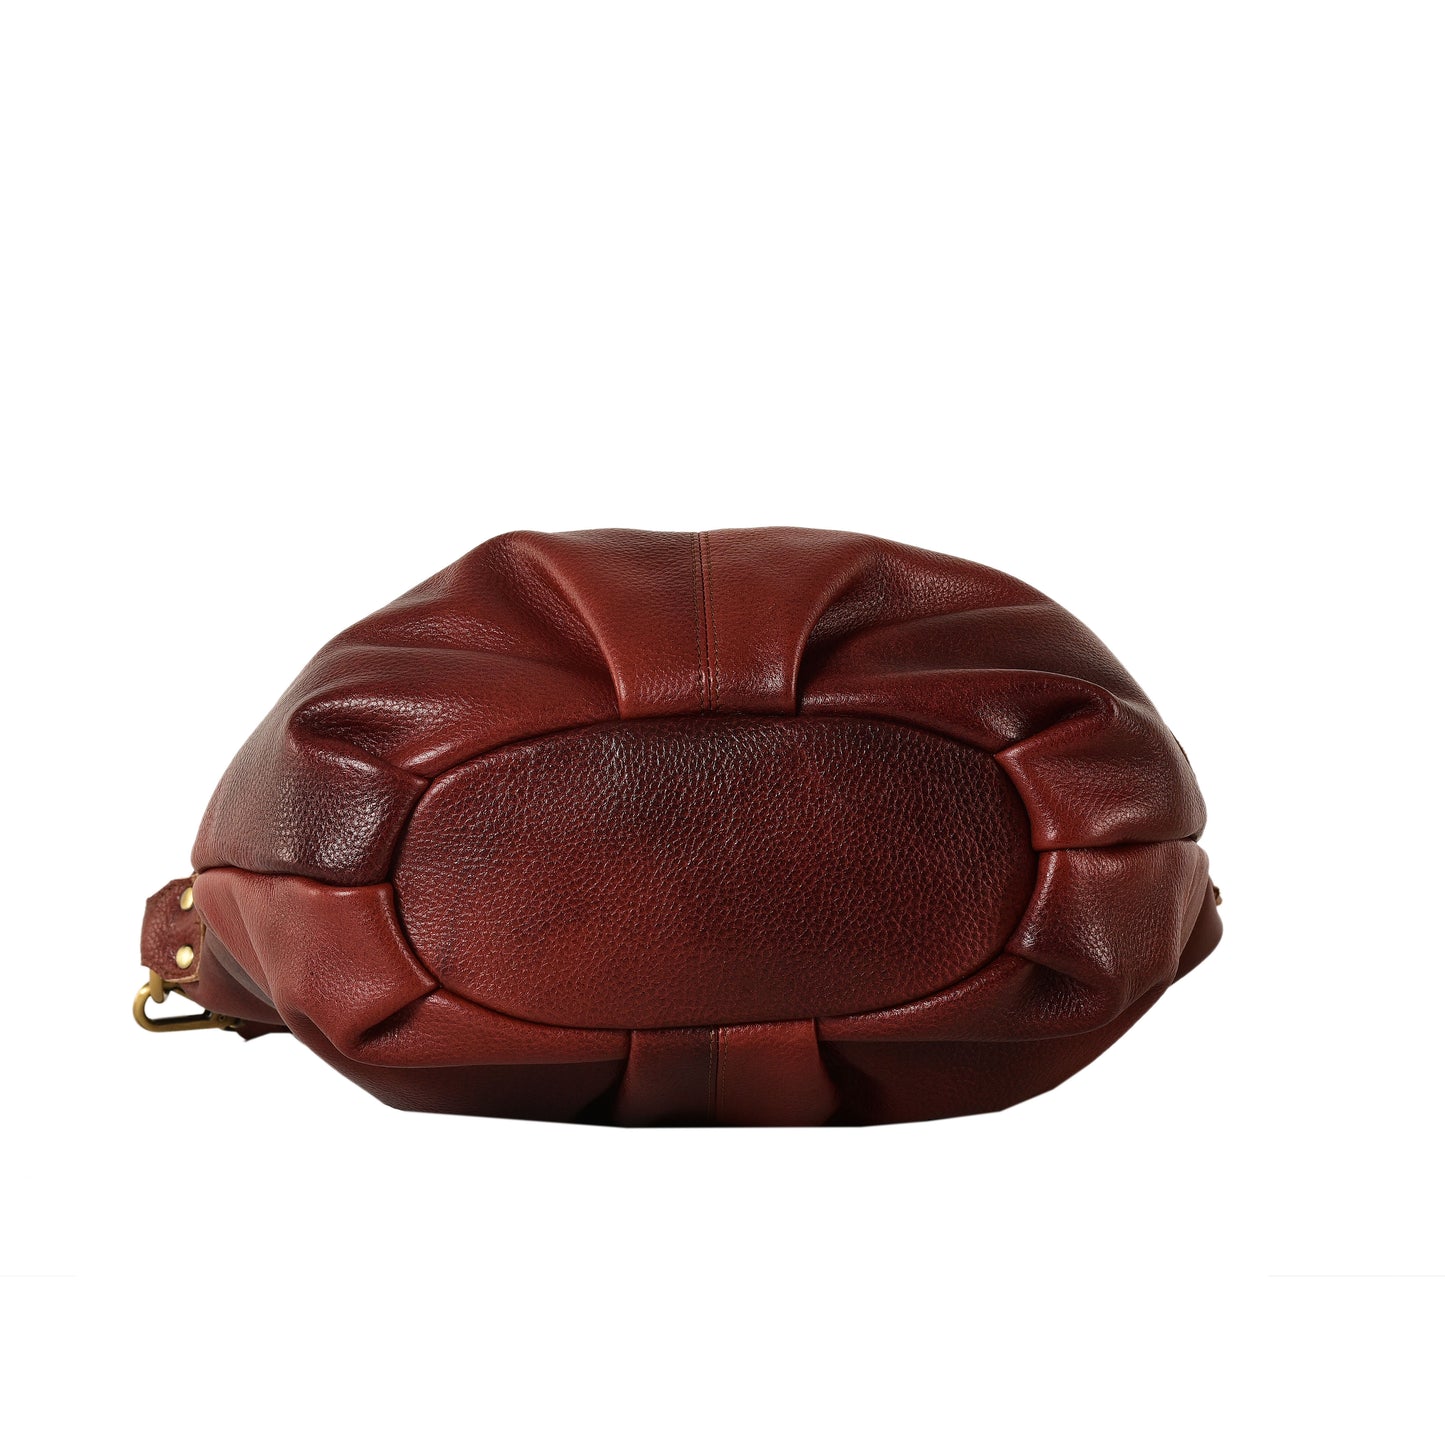 Cognac Brown Leather Hobo Bag Everyday Crossbody Leather Purse Leather Handbag Women's Shoulder Leather Bag